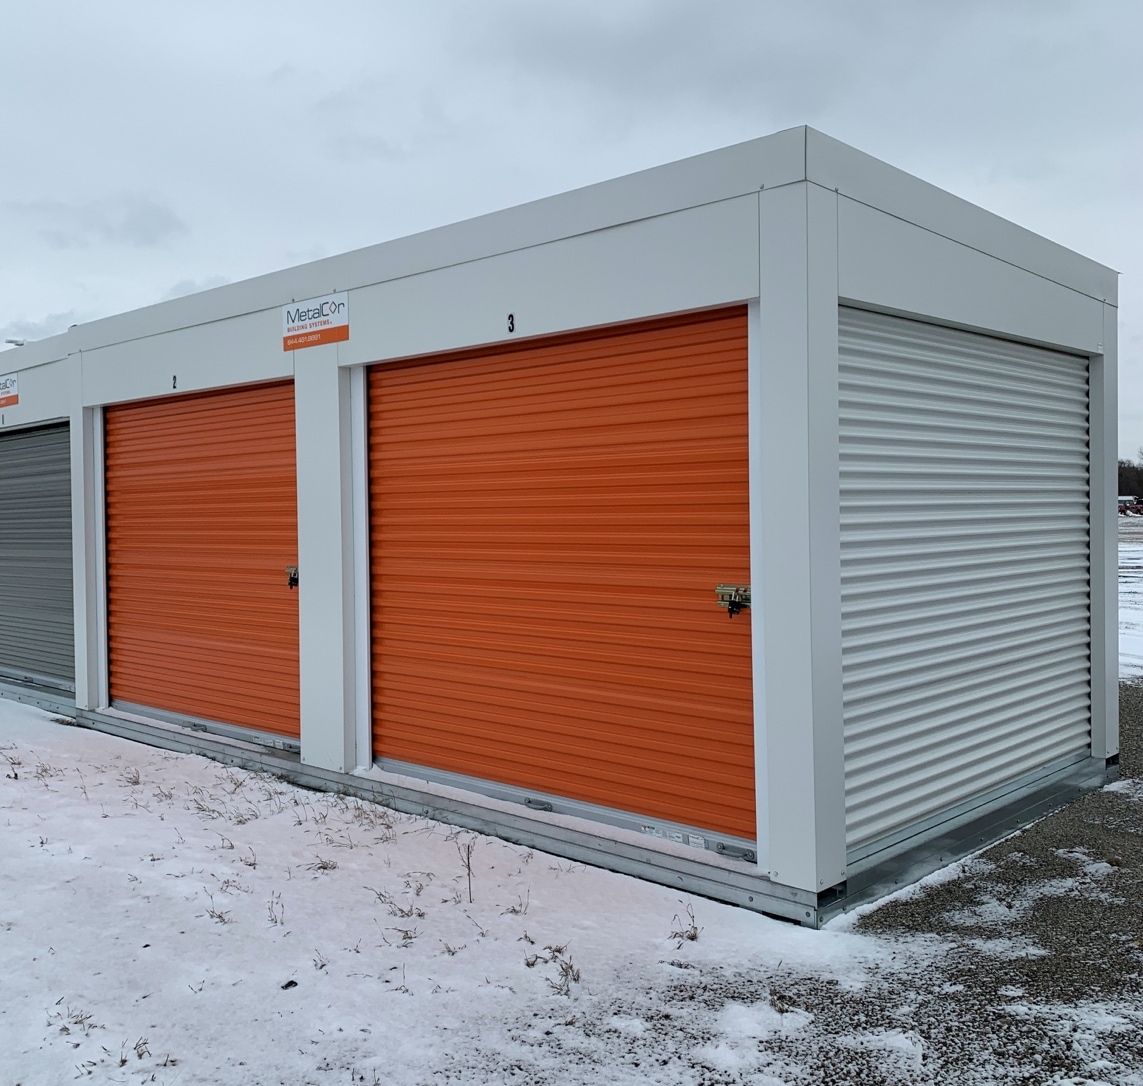 MetalCor storage unit with two doors